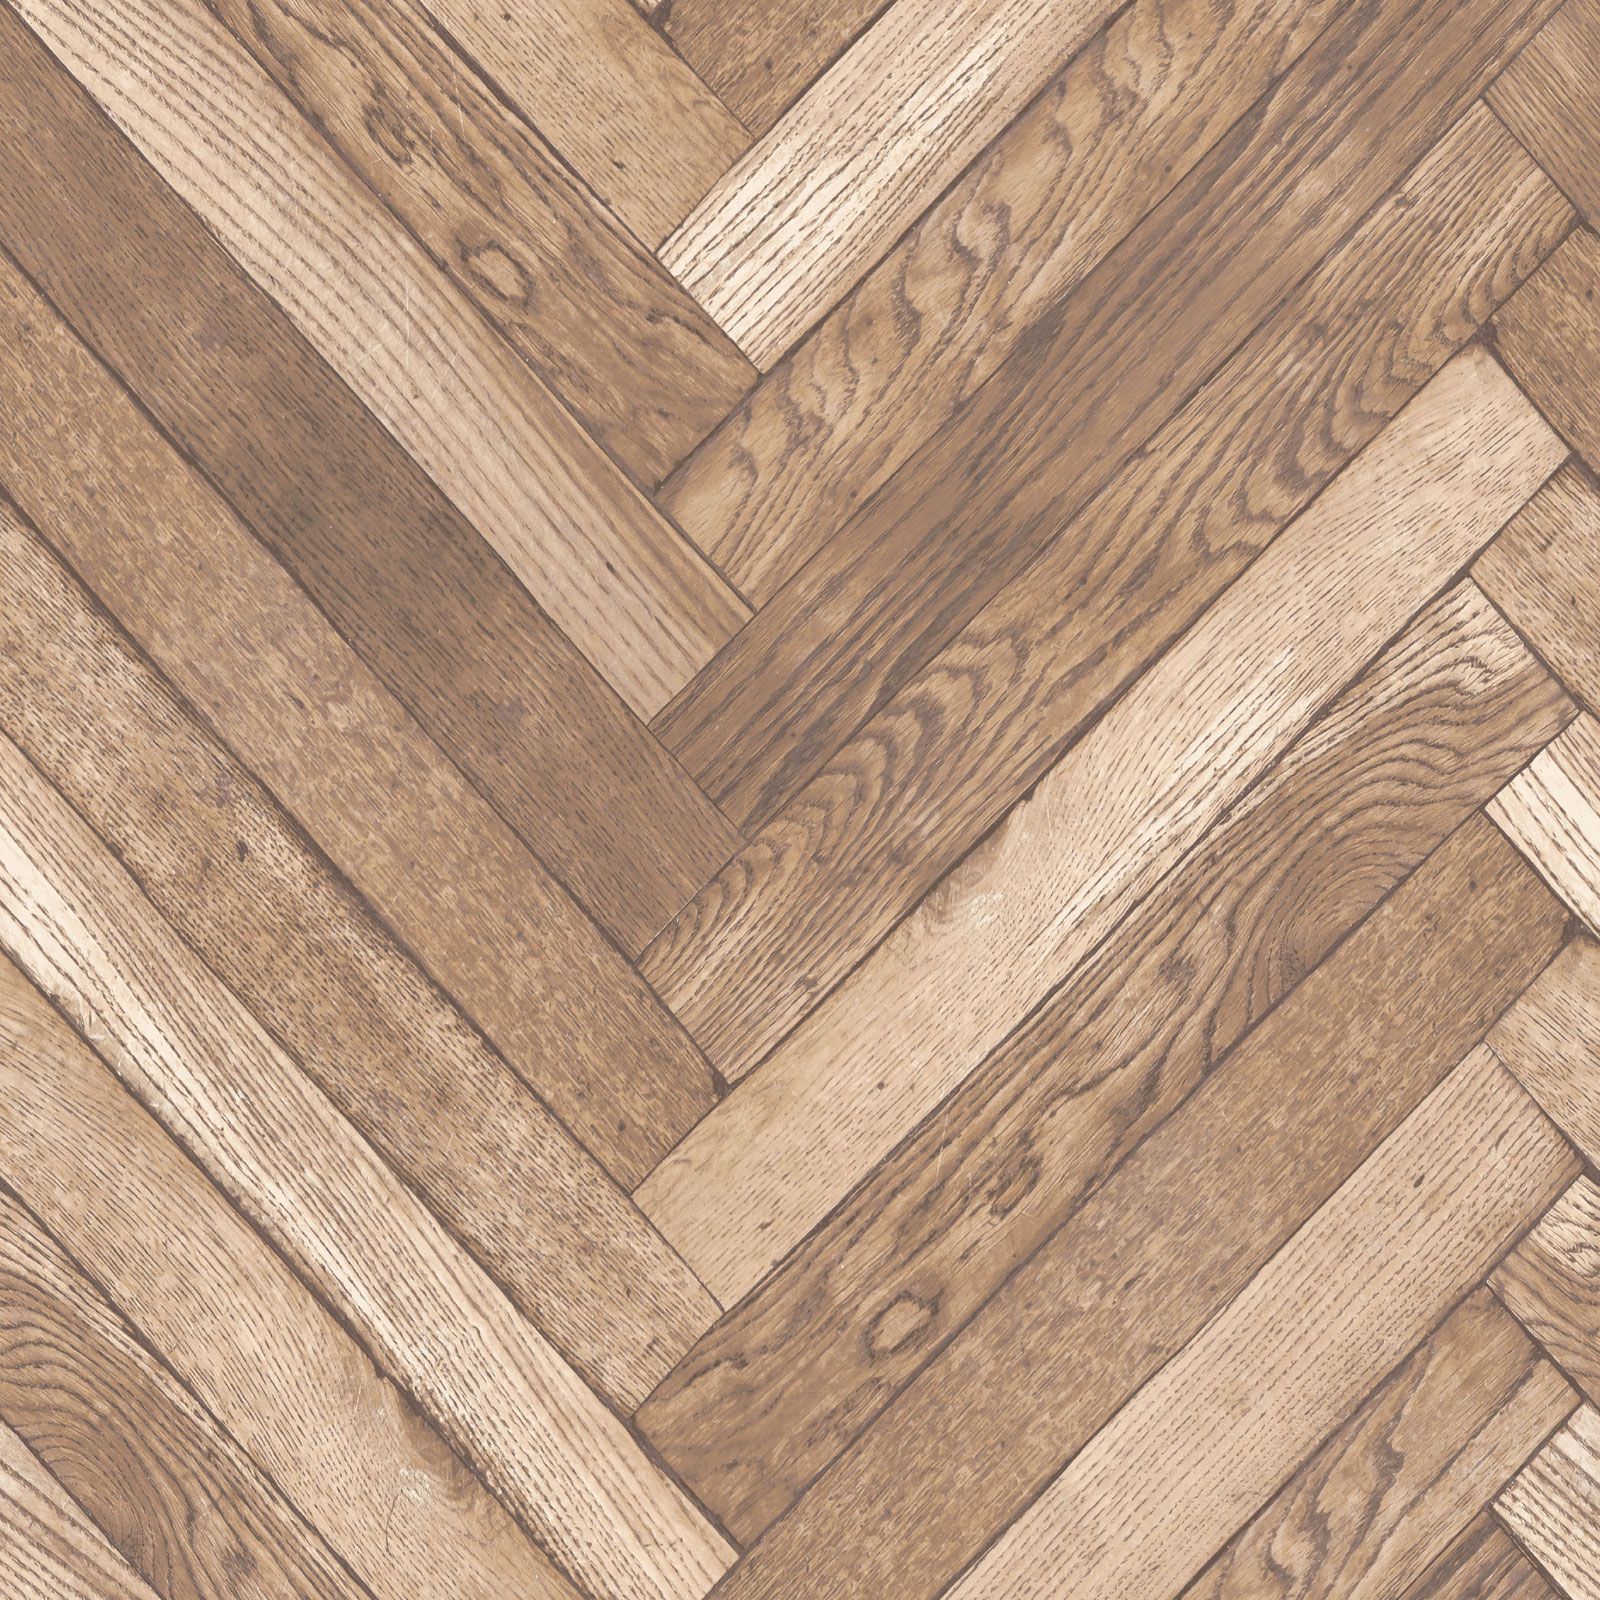 wood wallpaper for walls,wood flooring,floor,laminate flooring,flooring,wood